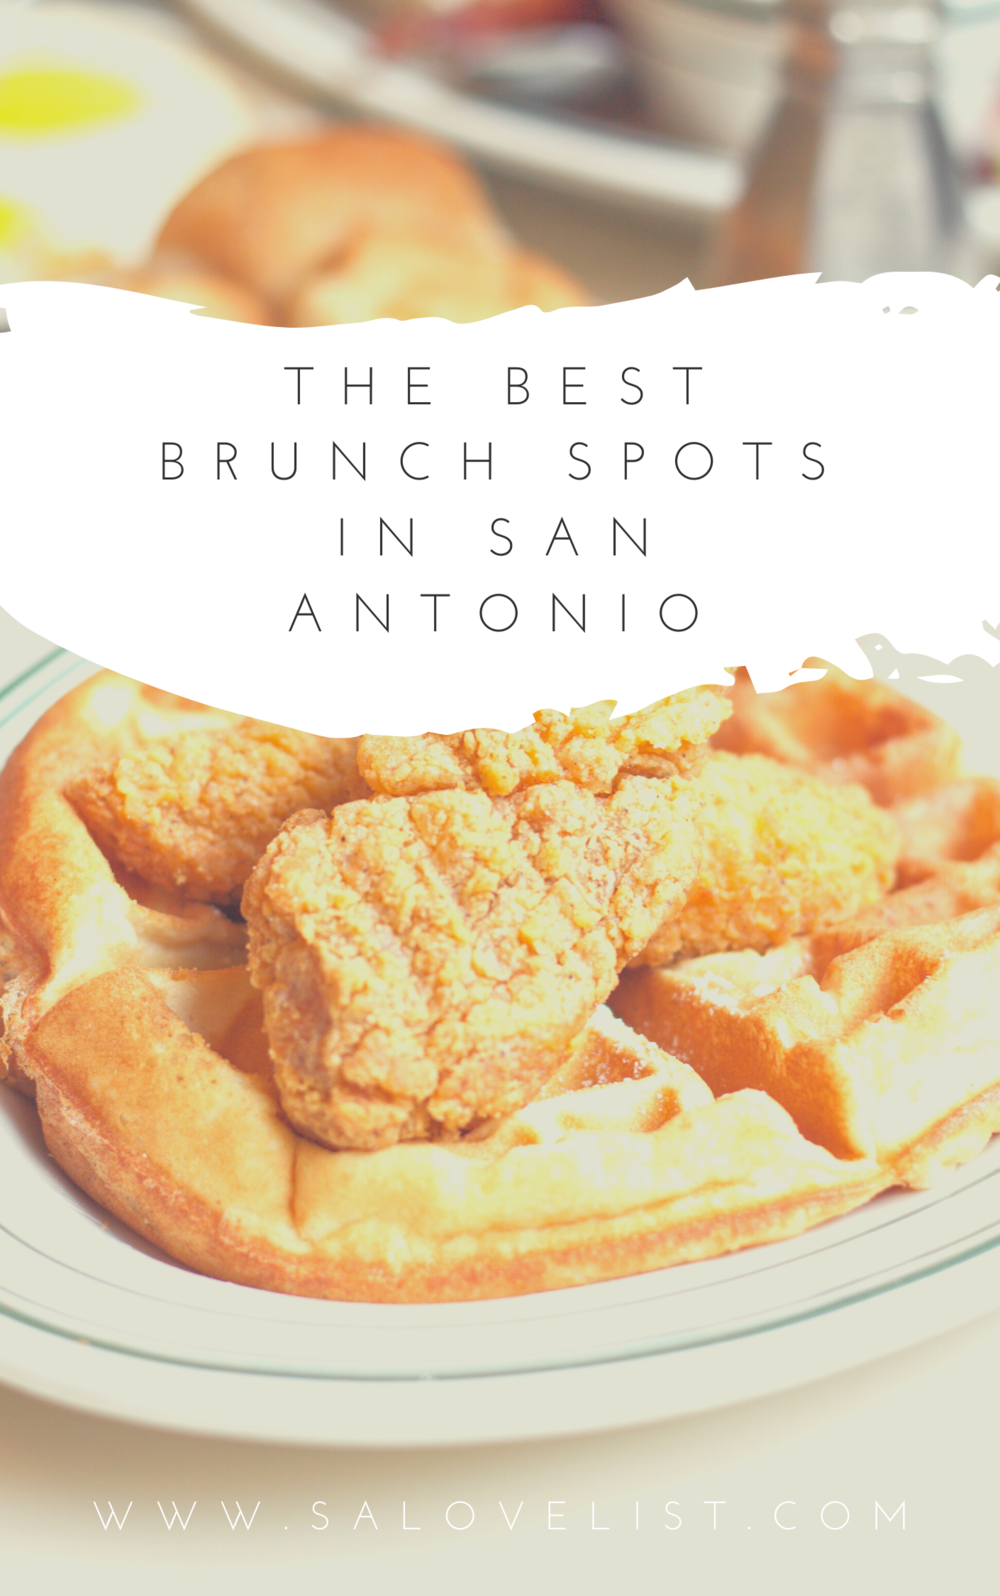 The Best Brunch Spots in San Antonio